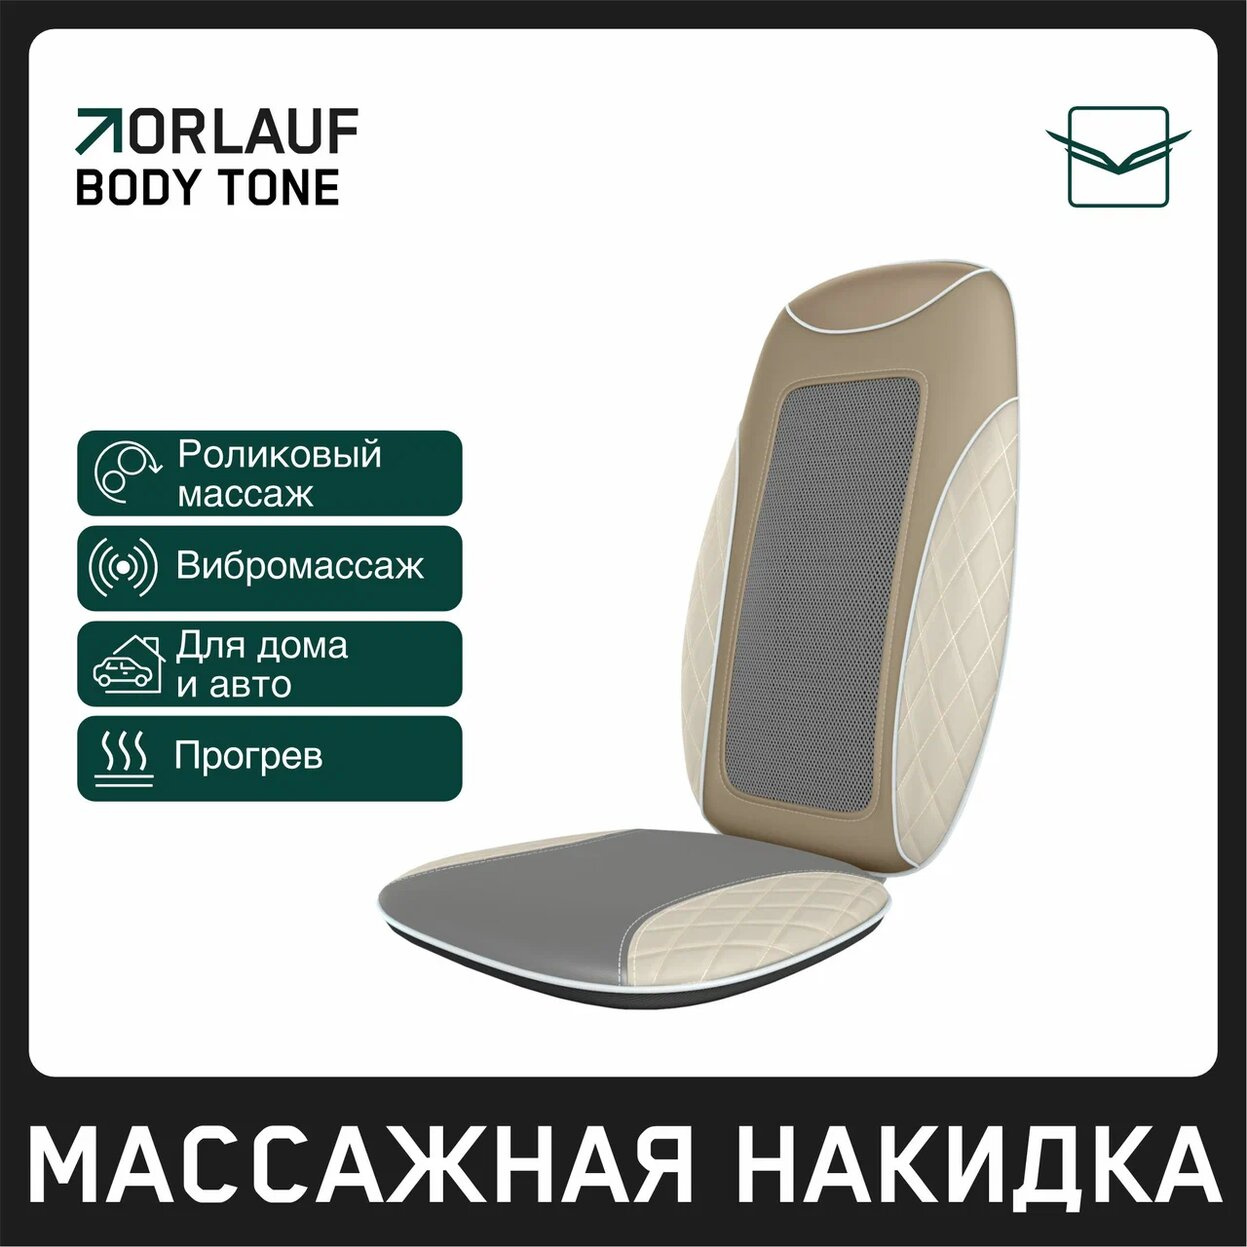 Orlauf Body Tone из каталога устройств для массажа в Санкт-Петербурге по цене 15400 ₽